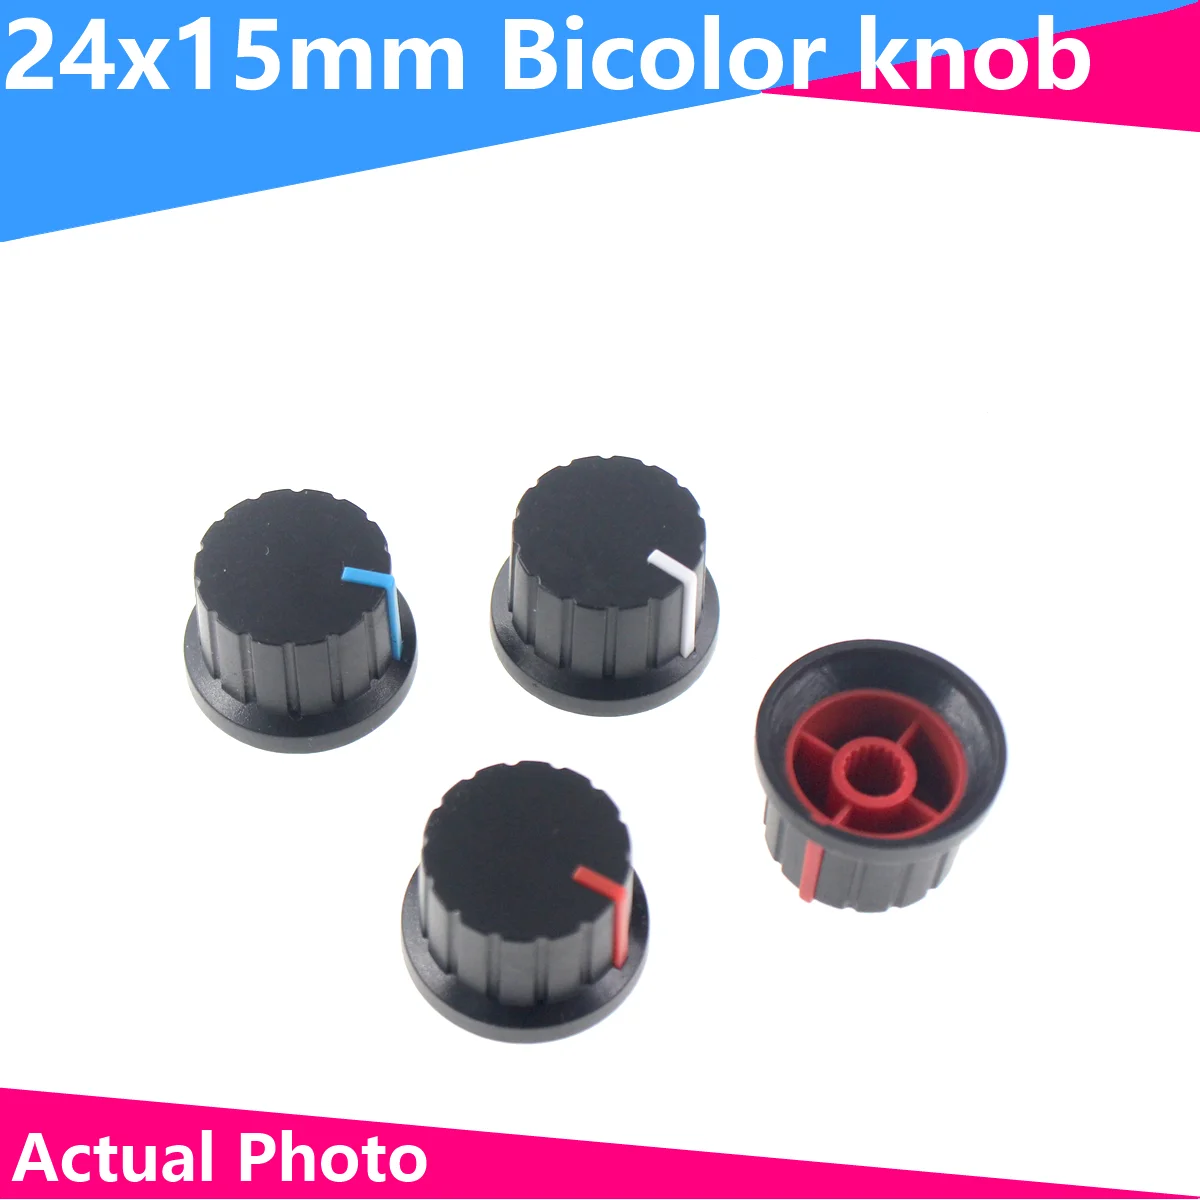 10PCS Dual color knob 24 with indication plastic knob 6mm potentiometer cap speaker knob straw hat amplifier knob